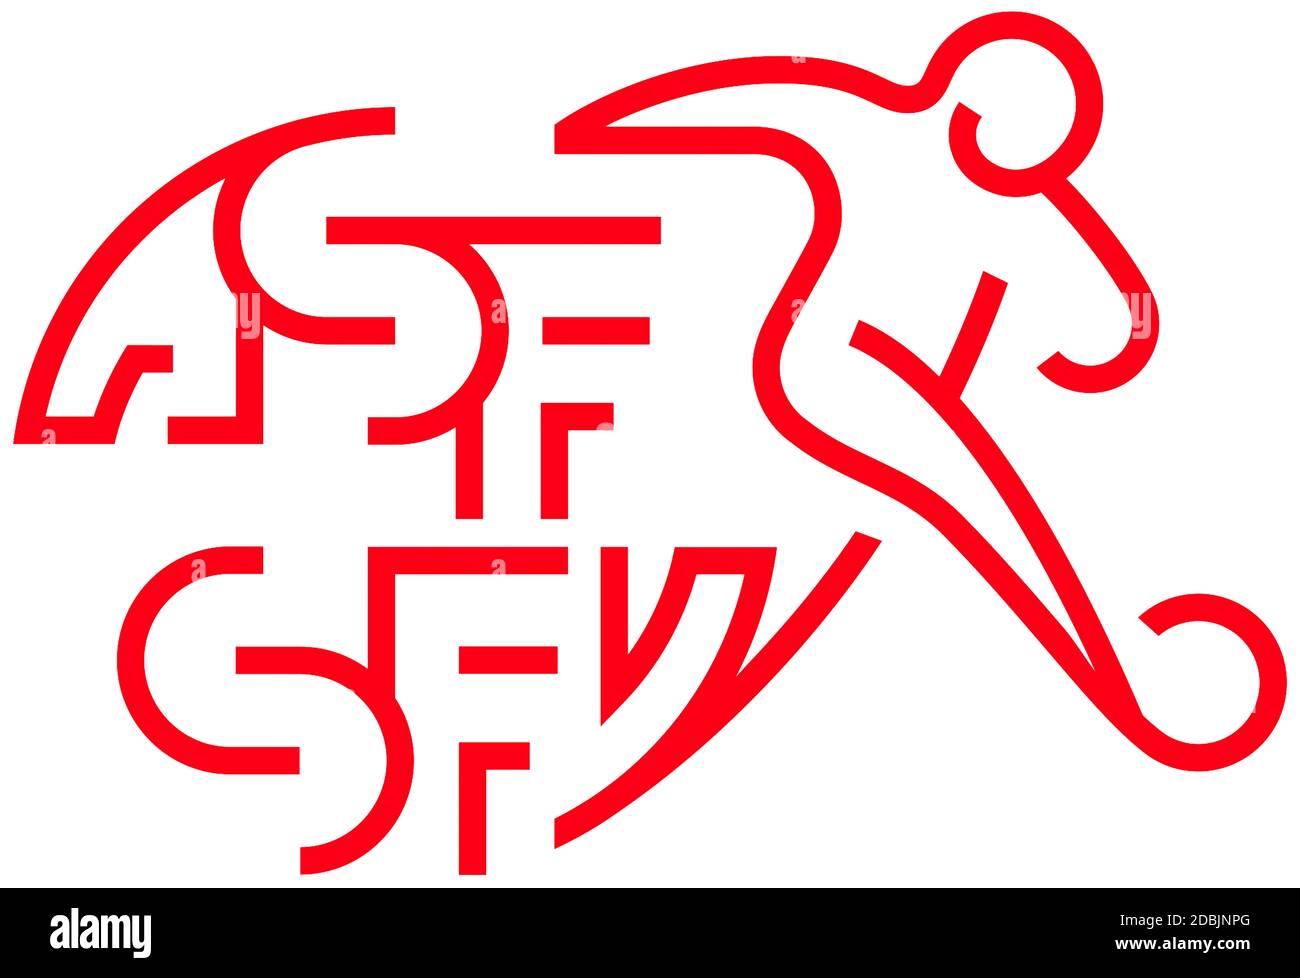 Switzerland football logo hi-res stock photography and images - Alamy